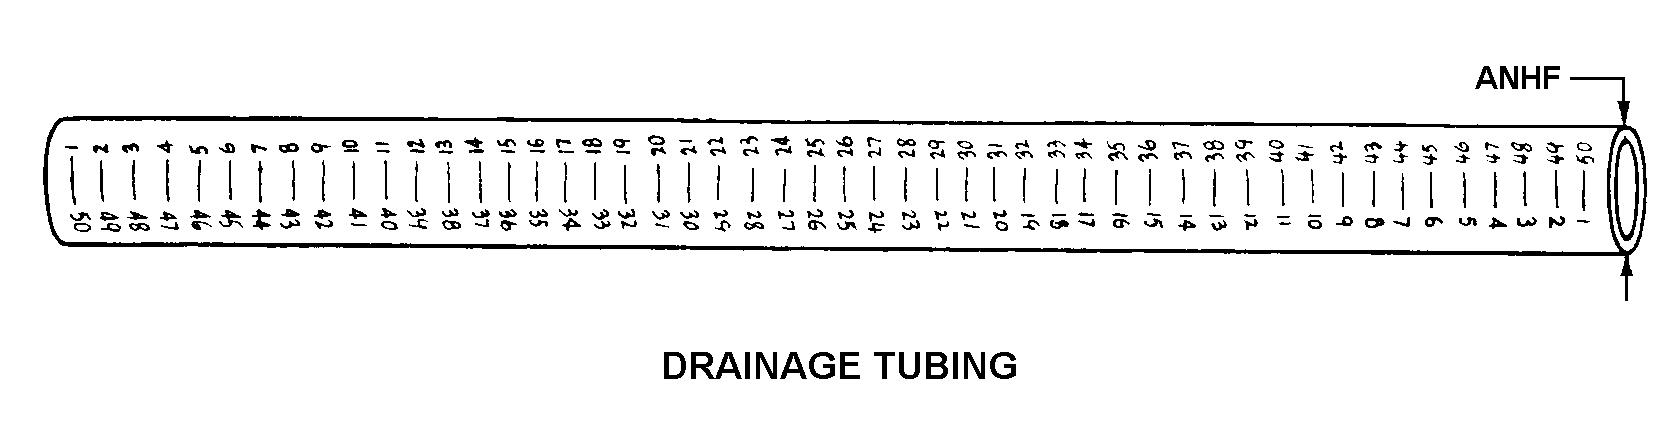 DRAINAGE TUBING style nsn 6515-01-273-8624